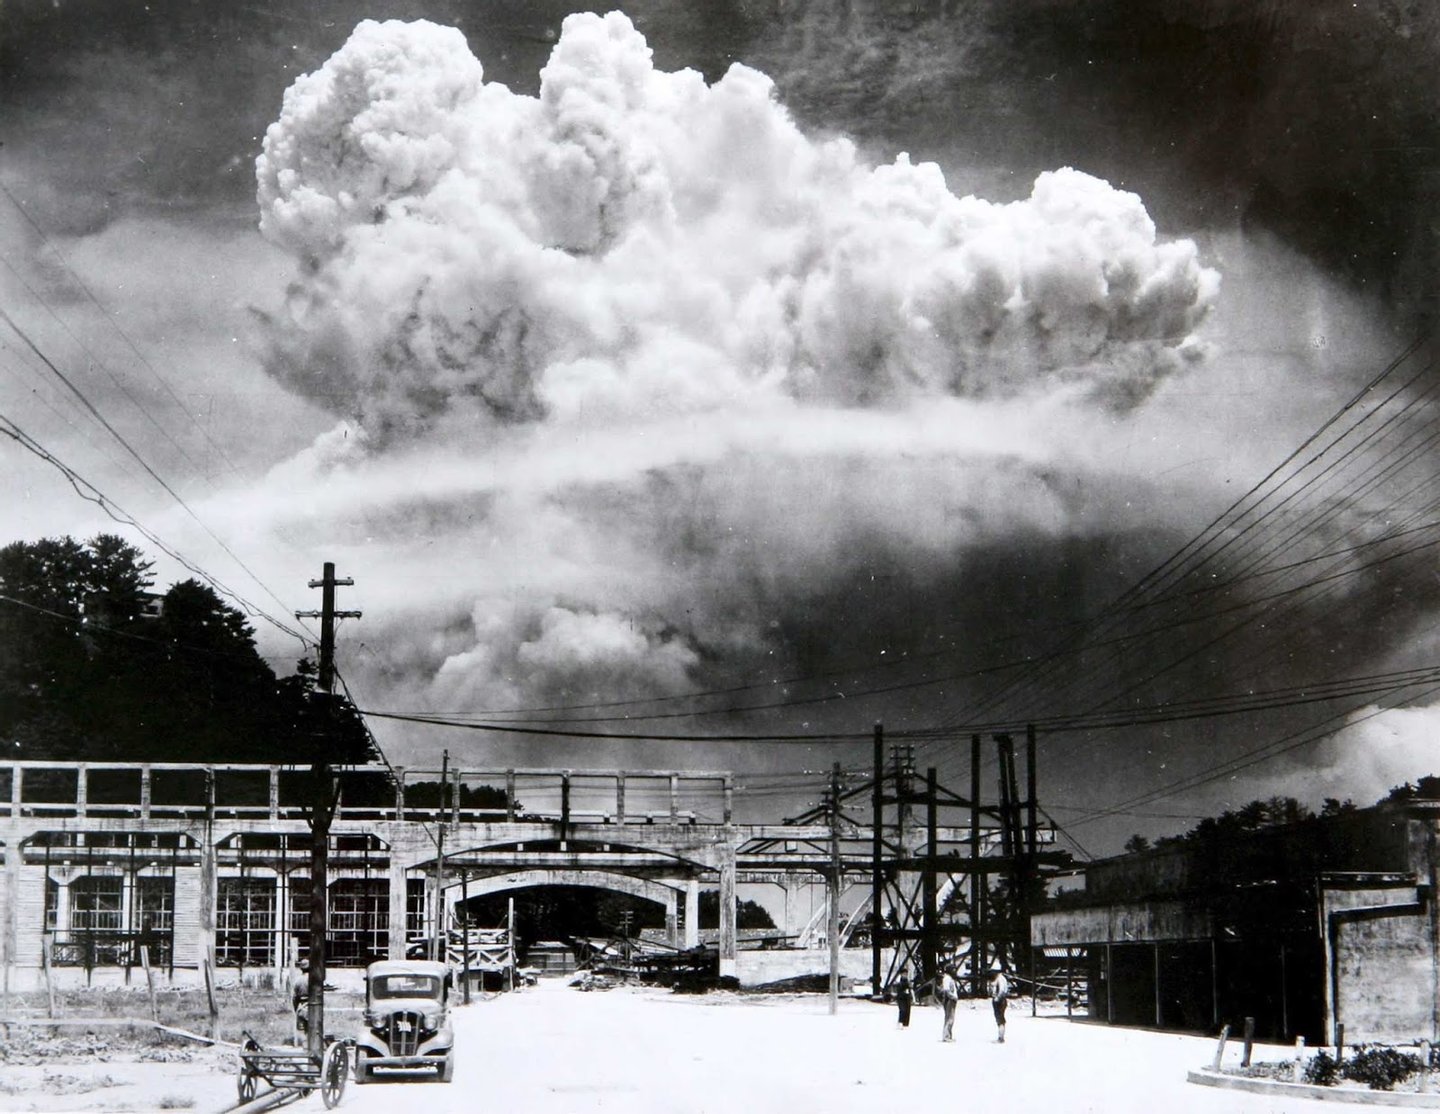 http://observador.pt/wp-content/uploads/2016/01/the-atomic-cloud-over-nagasaki-1945-hiromichi-matsuda.jpg